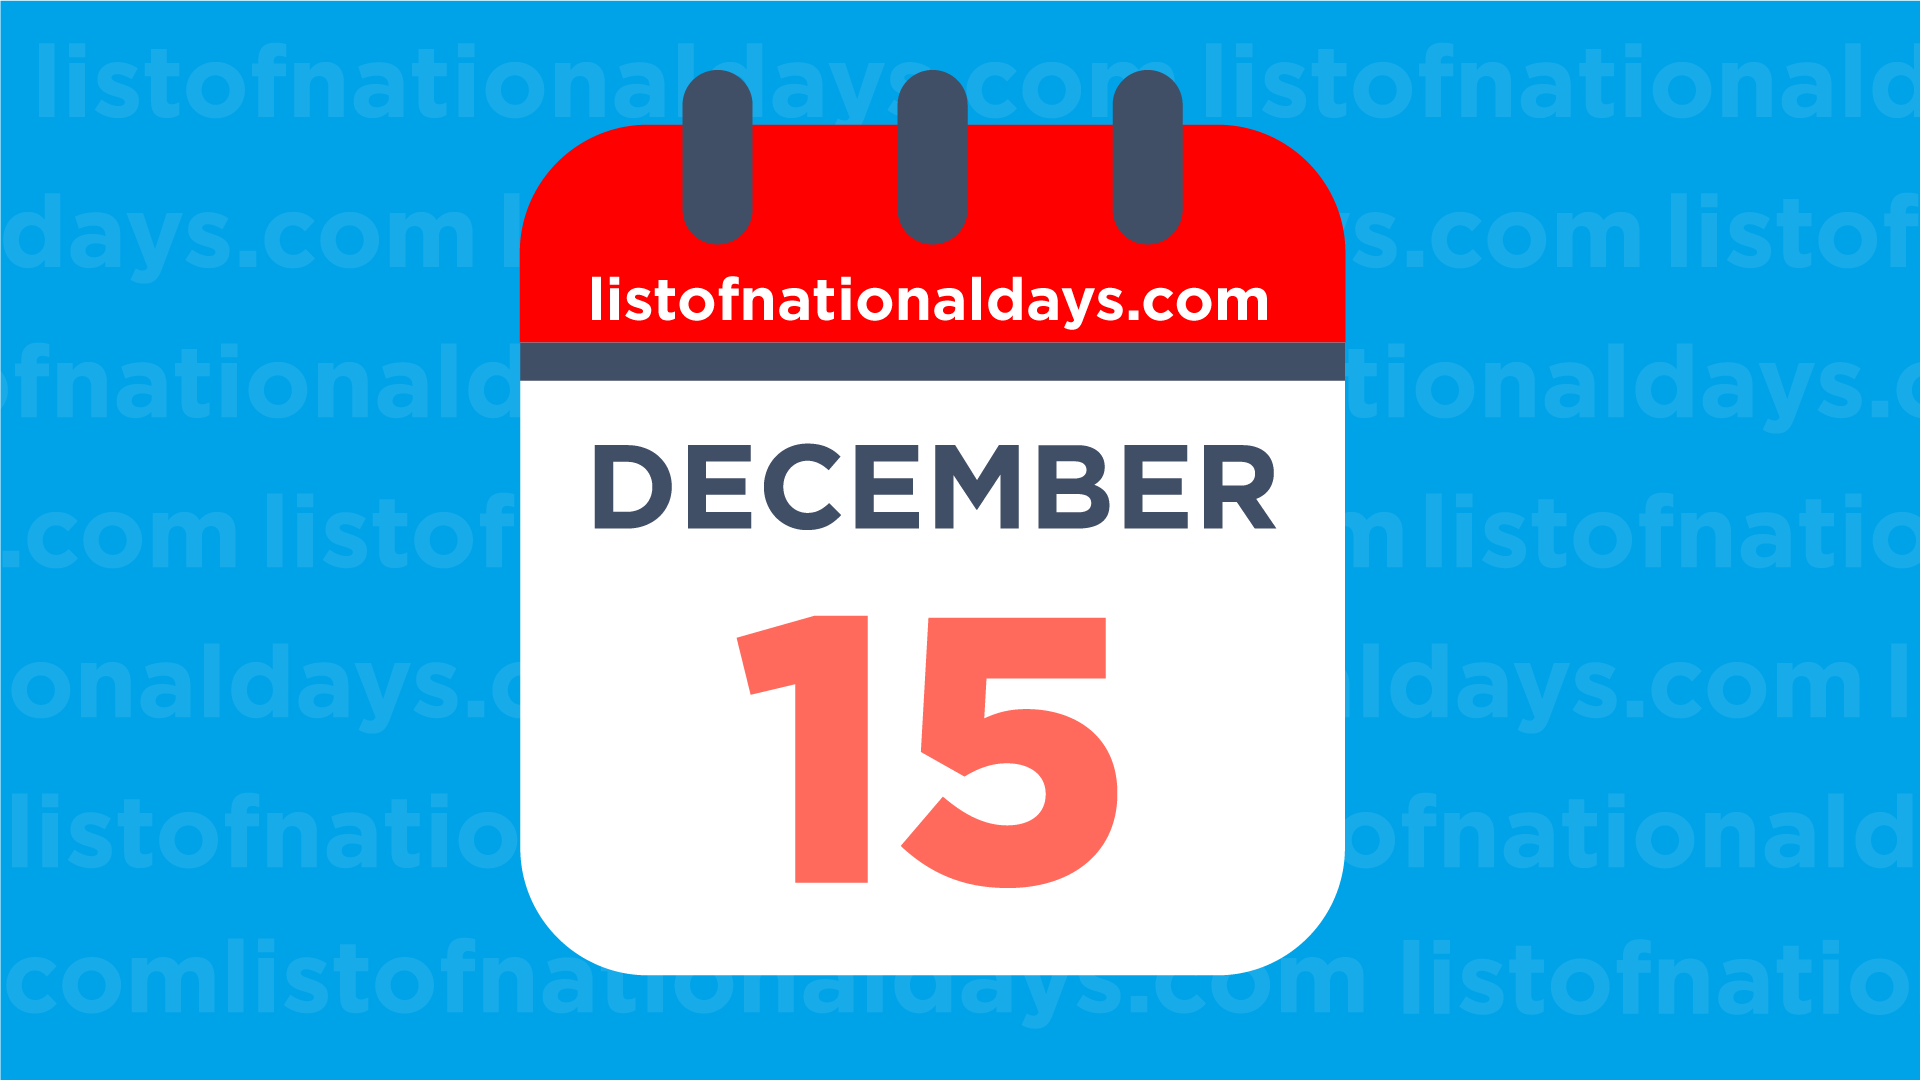 DECEMBER 15TH National Holidays,Observances & Famous Birthdays